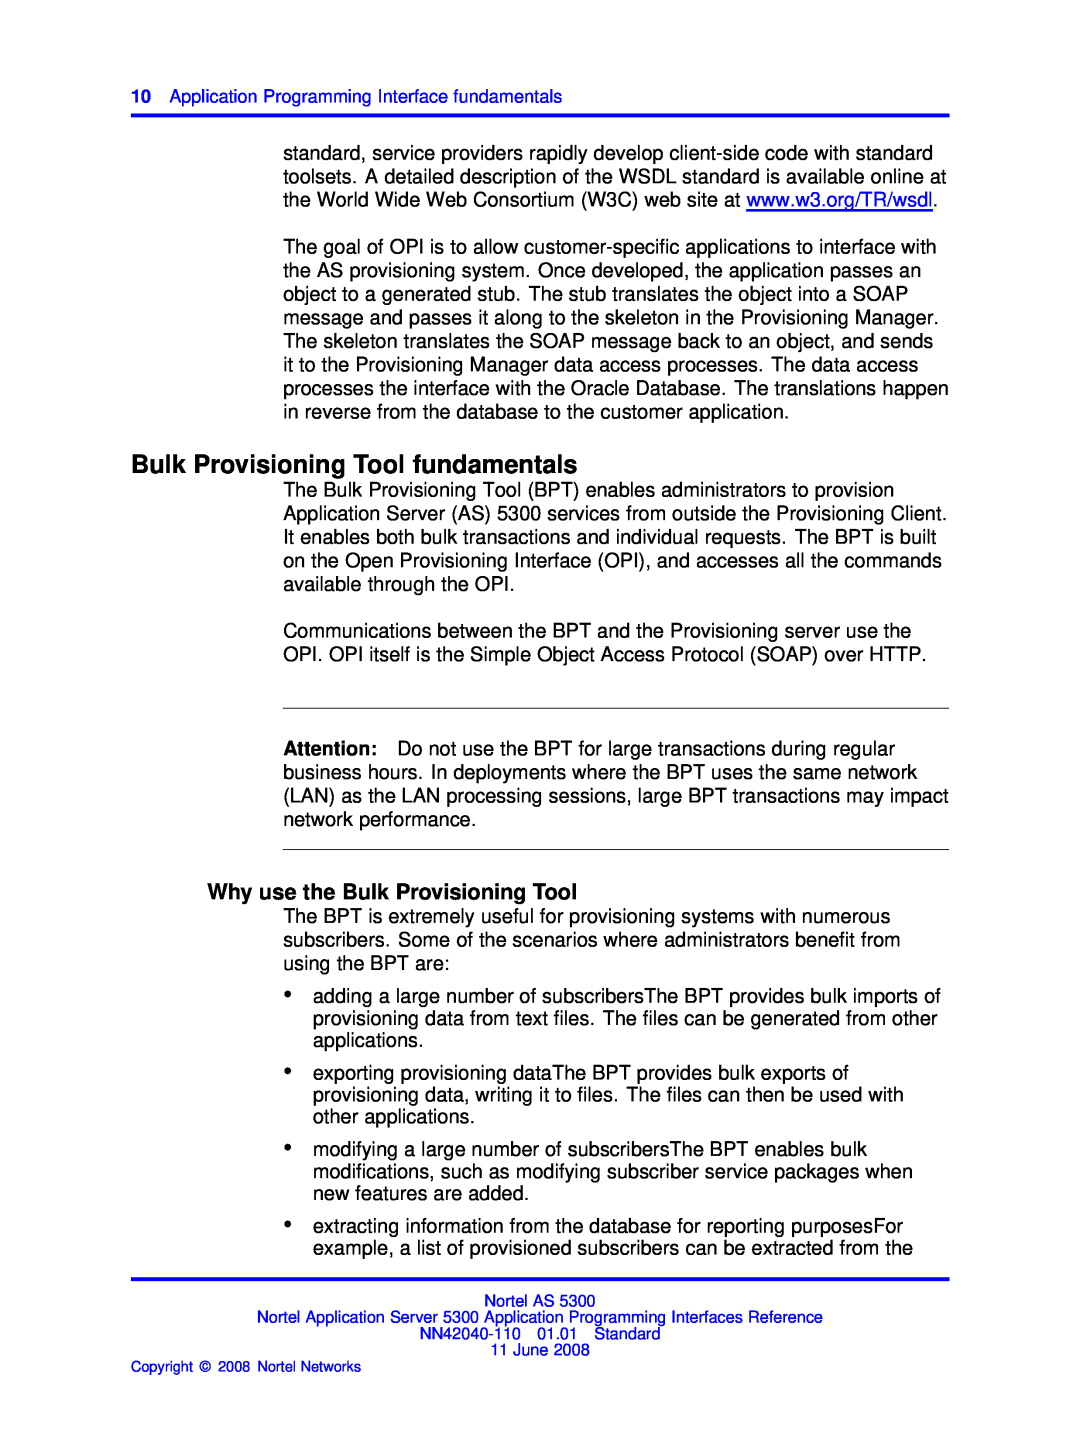 Nortel Networks AS 5300 manual Bulk Provisioning Tool fundamentals, Why use the Bulk Provisioning Tool 